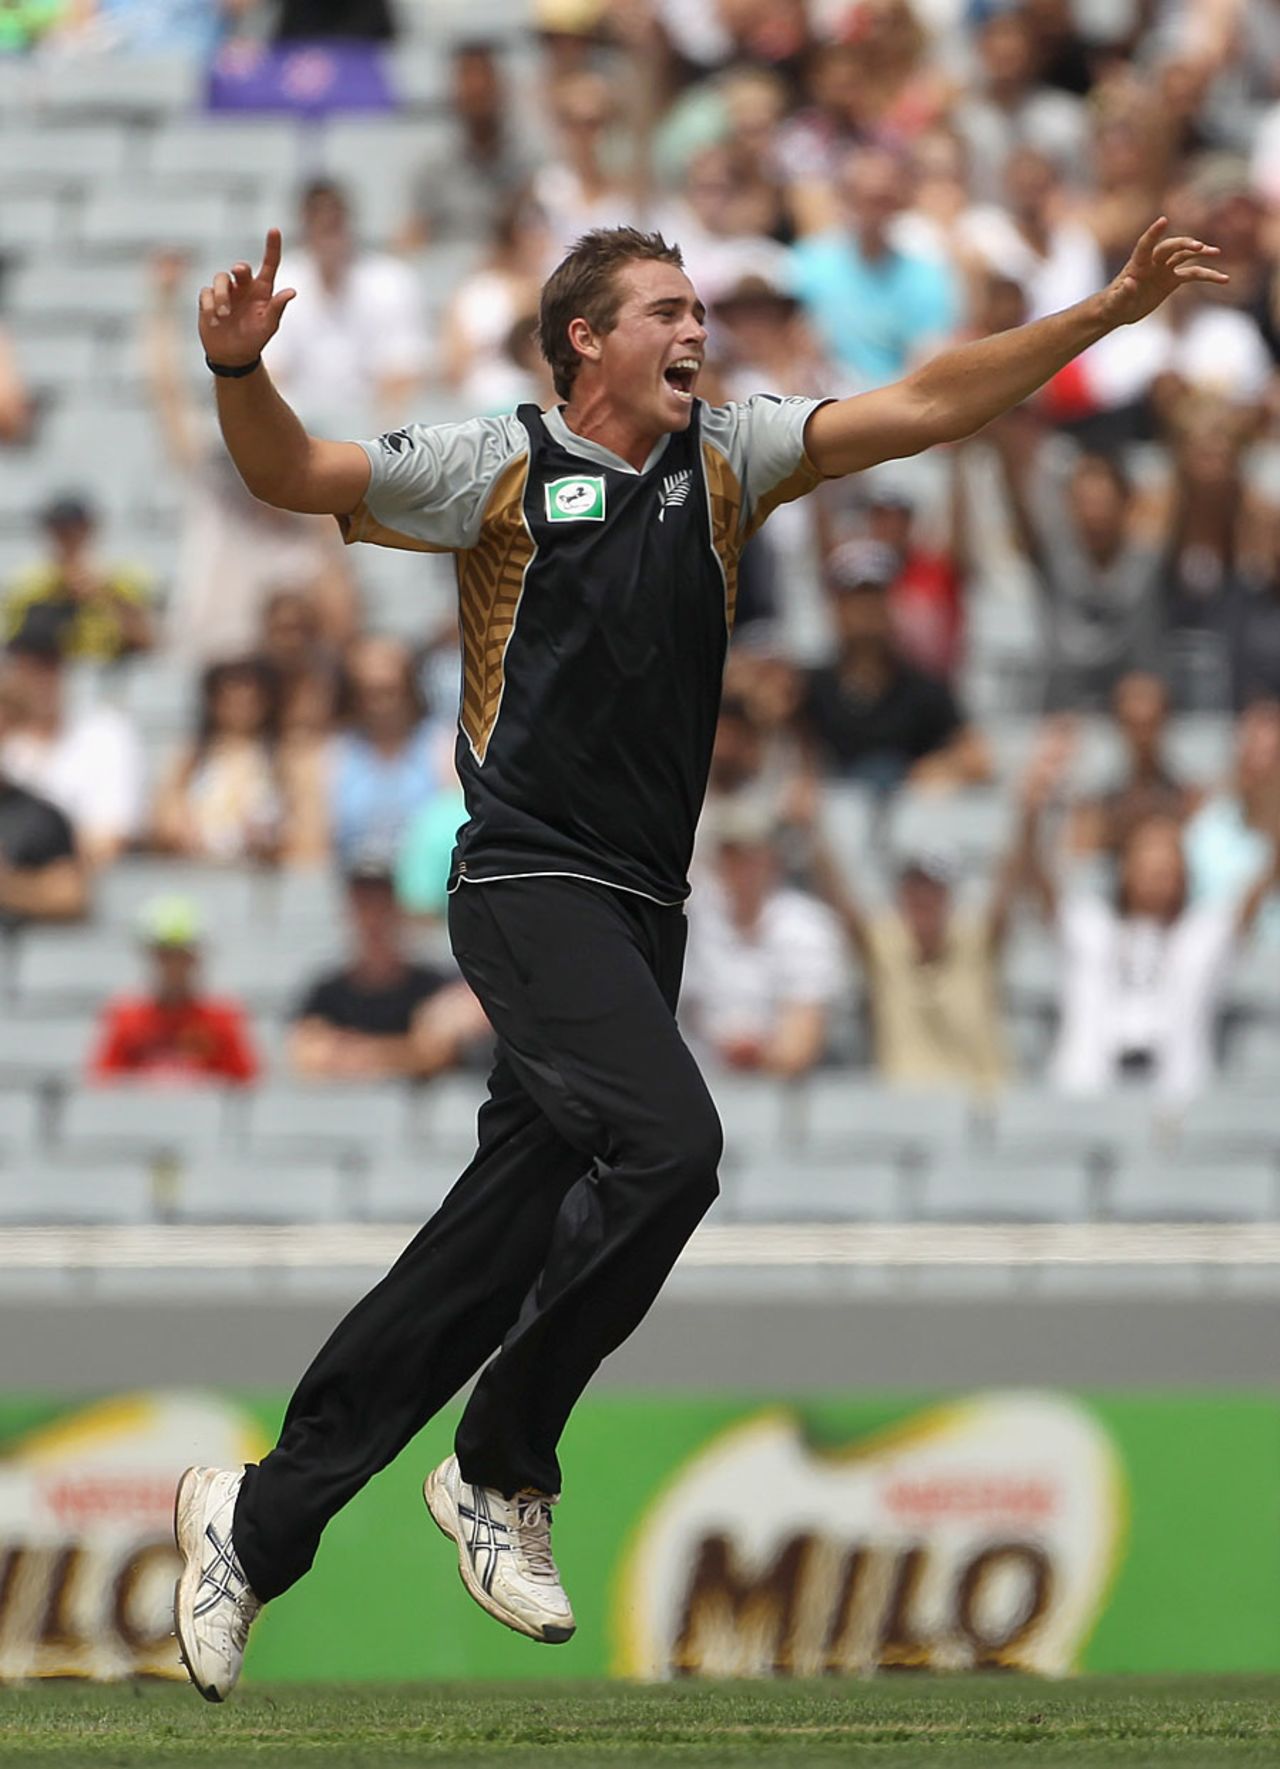 Tim Southee celebrates after taking a wicket, New Zealand v Pakistan, 1st Twenty20, Auckland, December 26, 2010